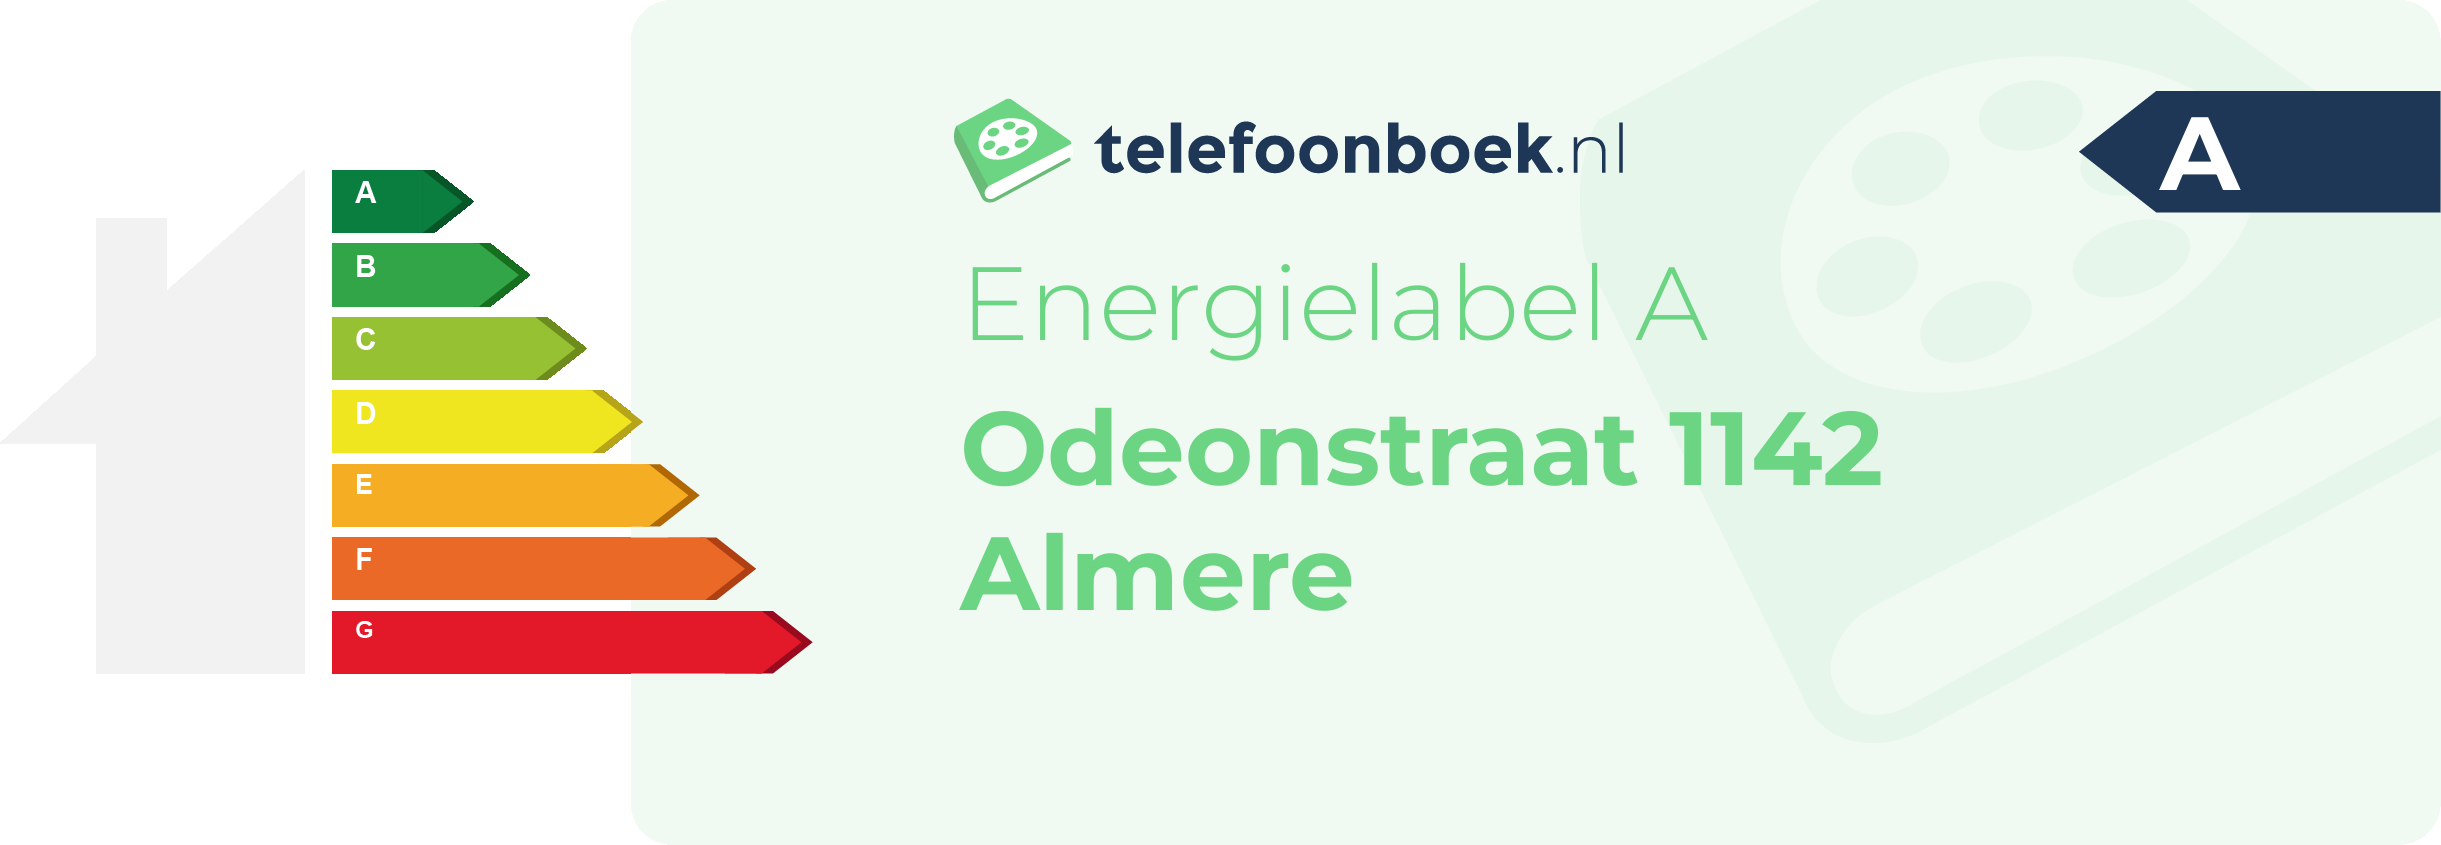 Energielabel Odeonstraat 1142 Almere